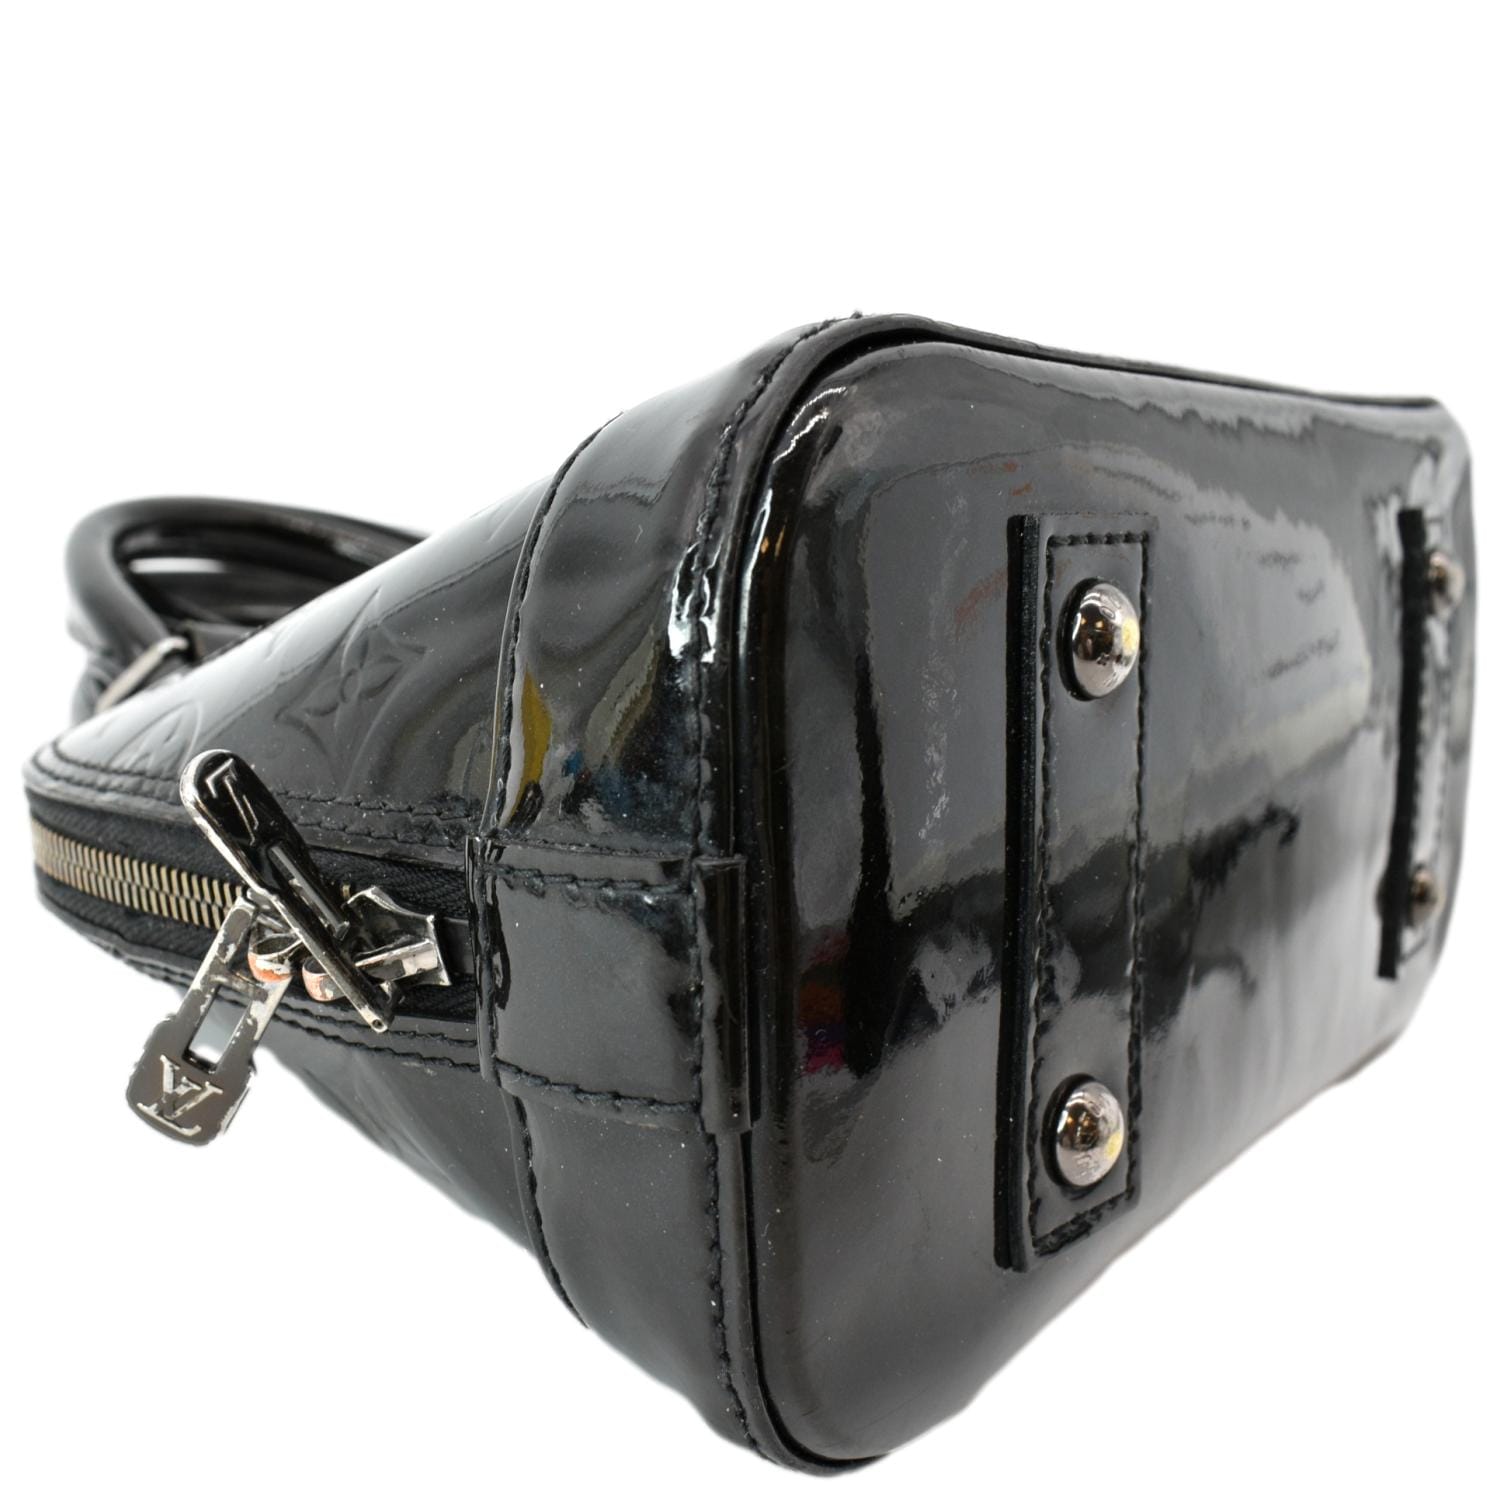 Louis Vuitton Authentic Damier Alma BB Cross Body Handbag Article: N41221  Made in France: Handbags: .com